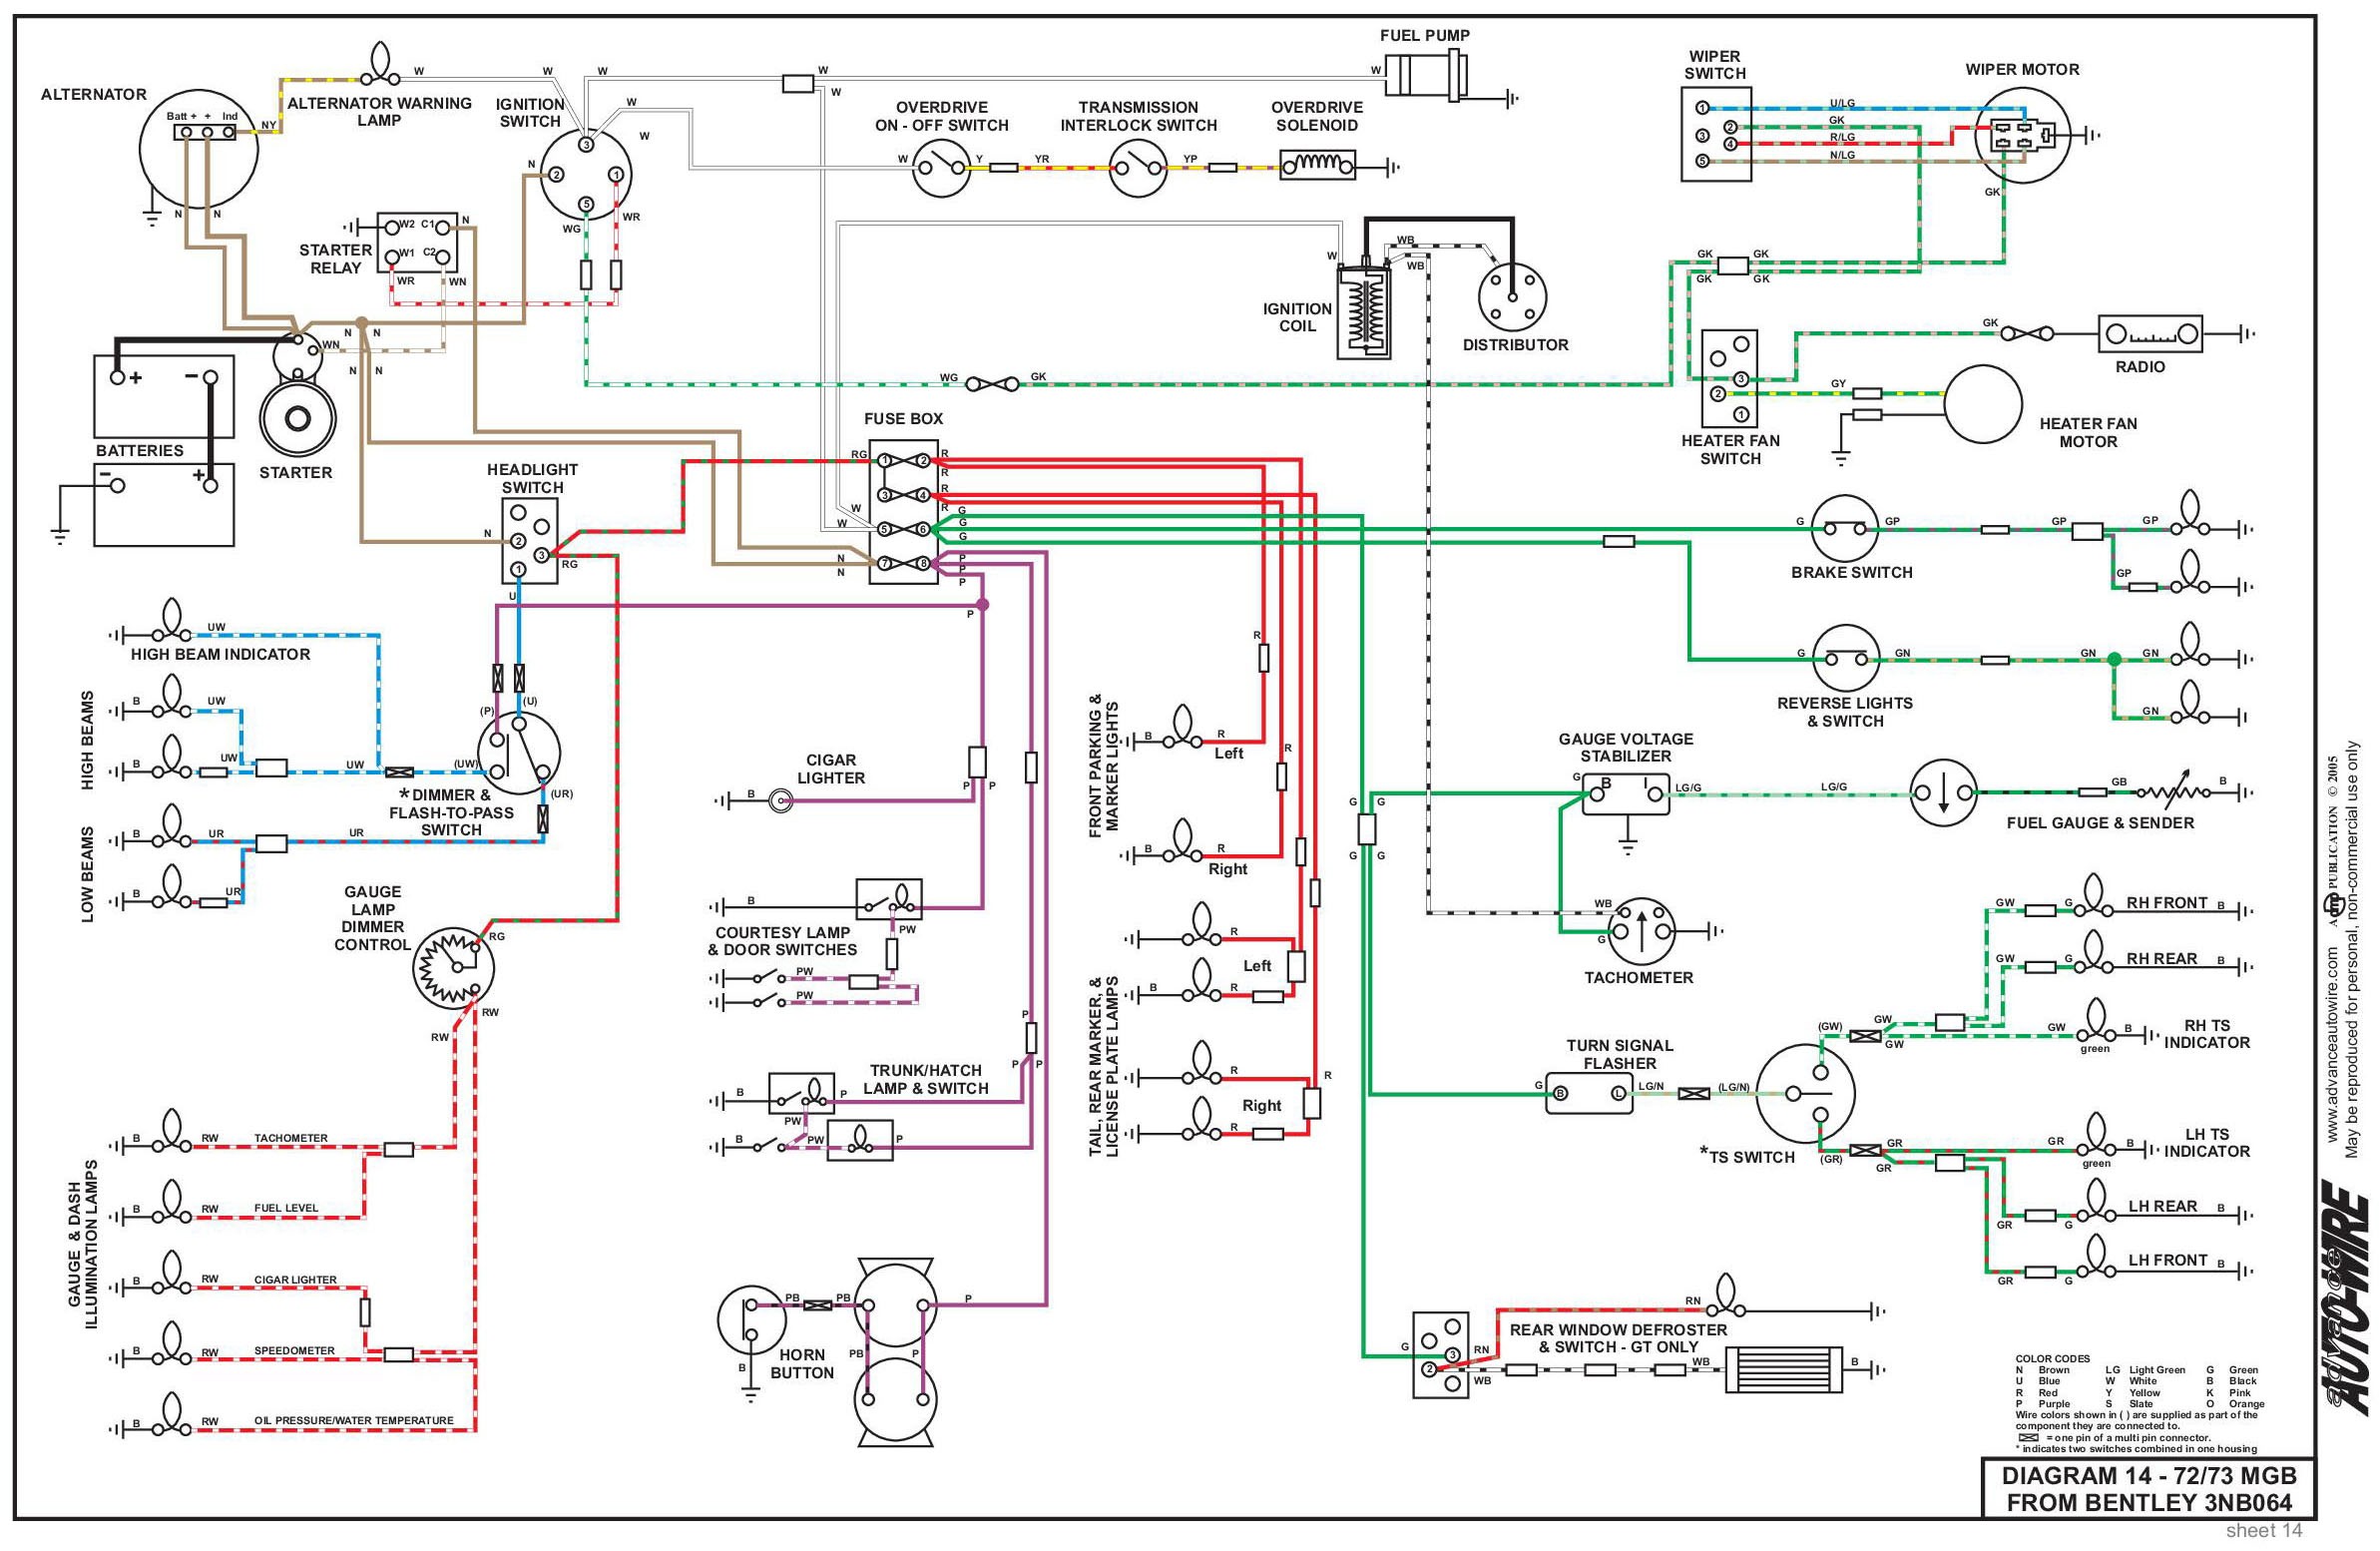 Turn Signal Flasher Relay Wiring Diagram | My Wiring DIagram